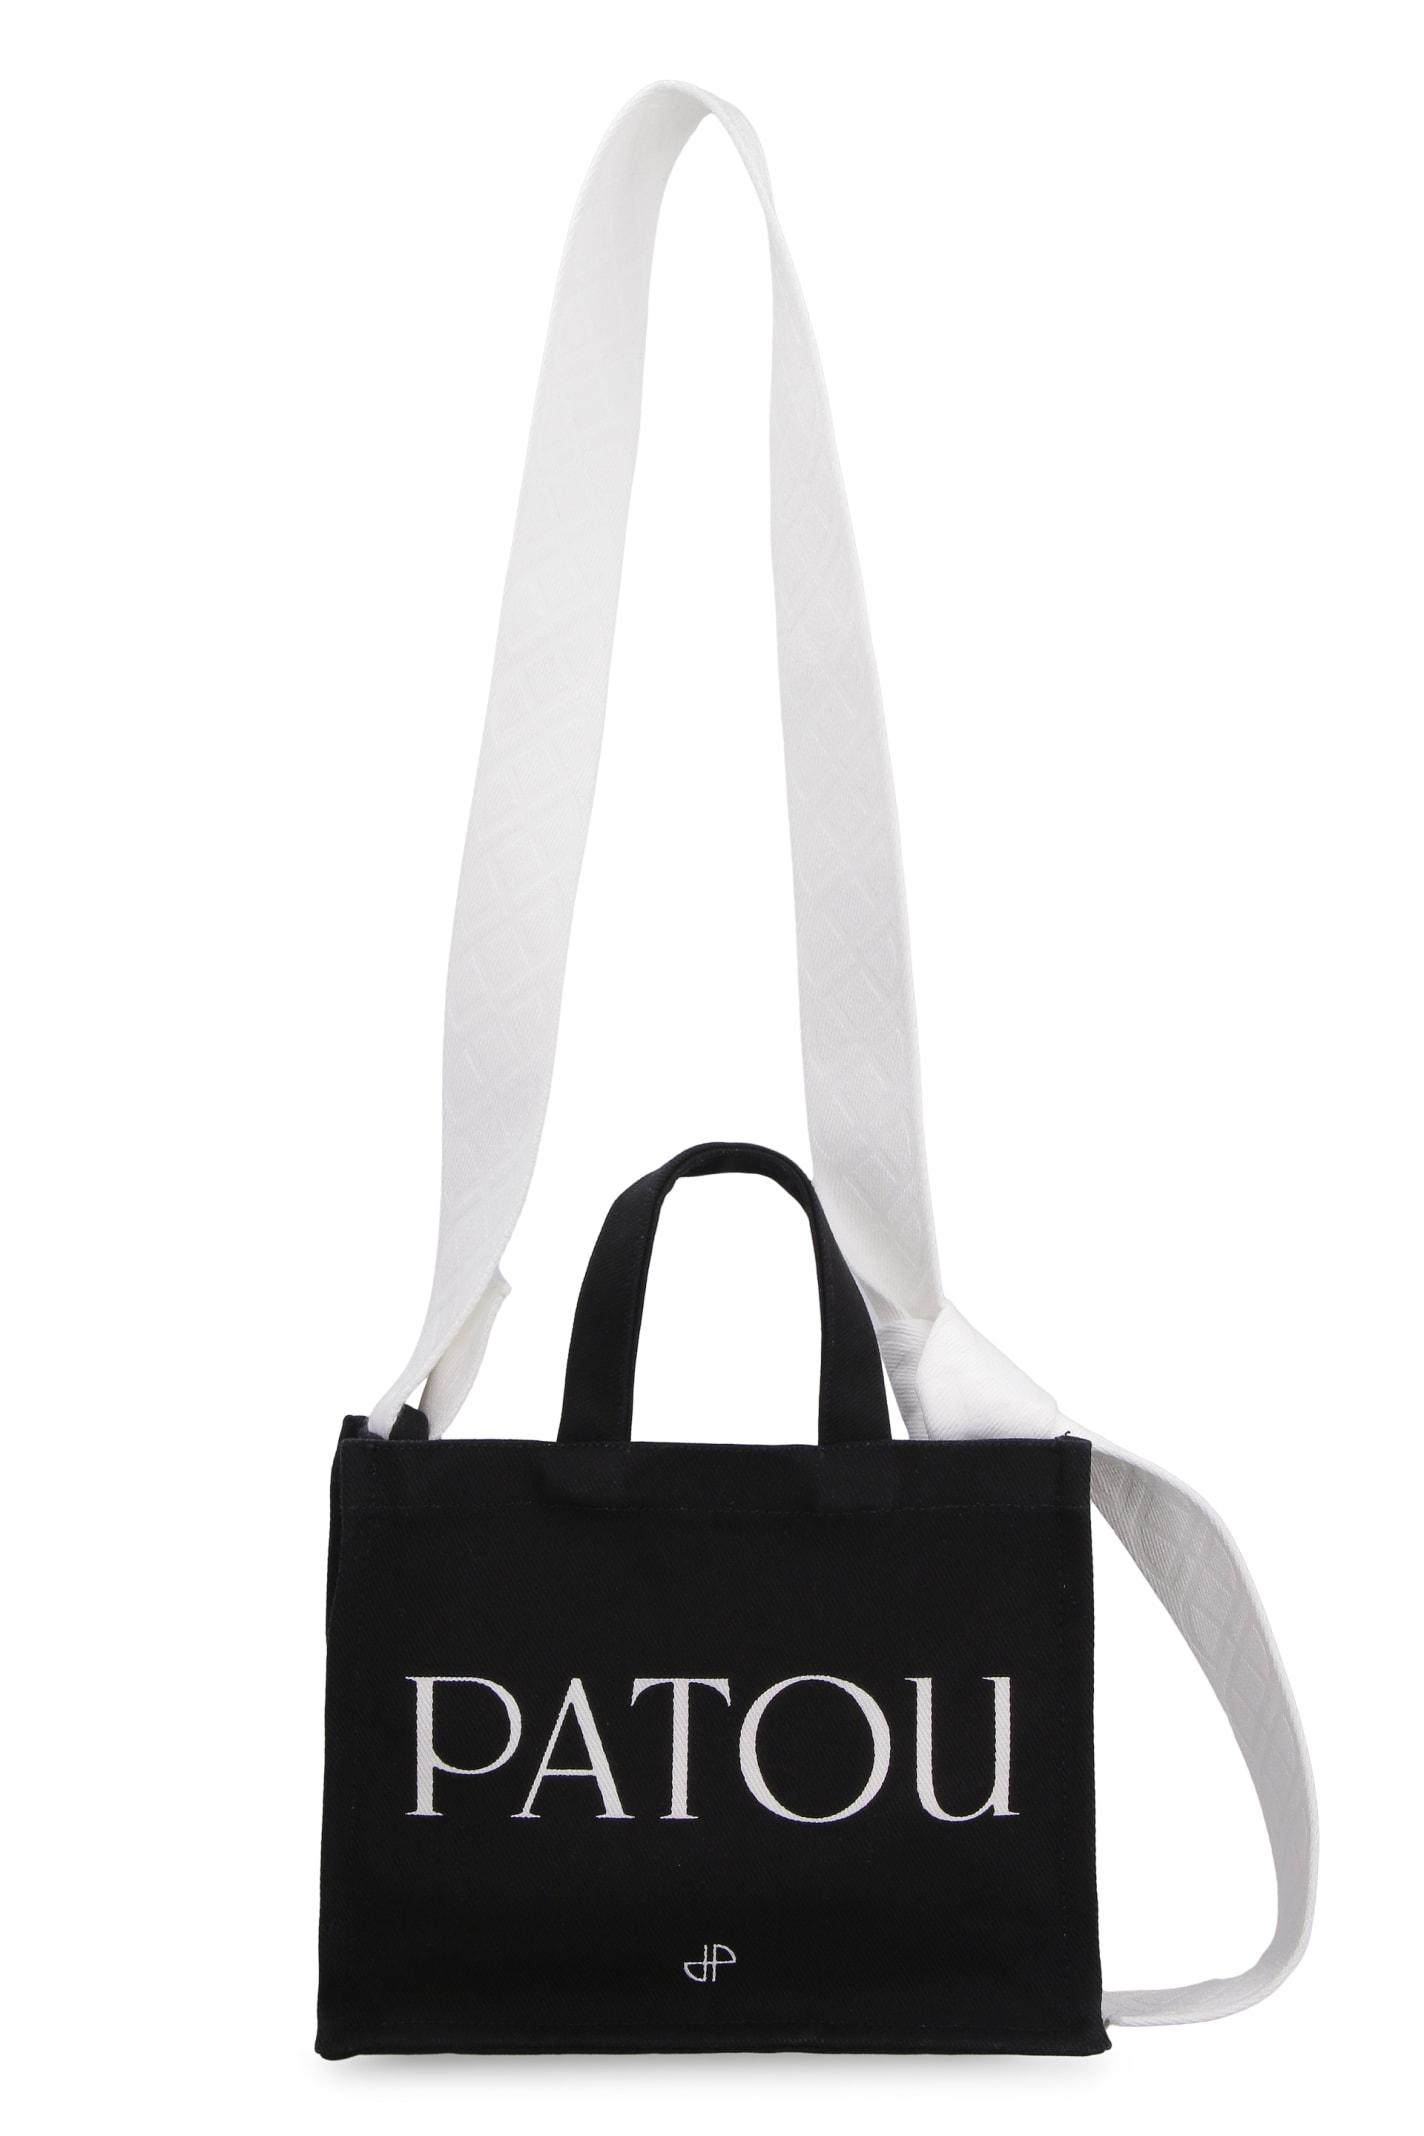 Patou Canvas Mini Tote Bag in Black | Lyst